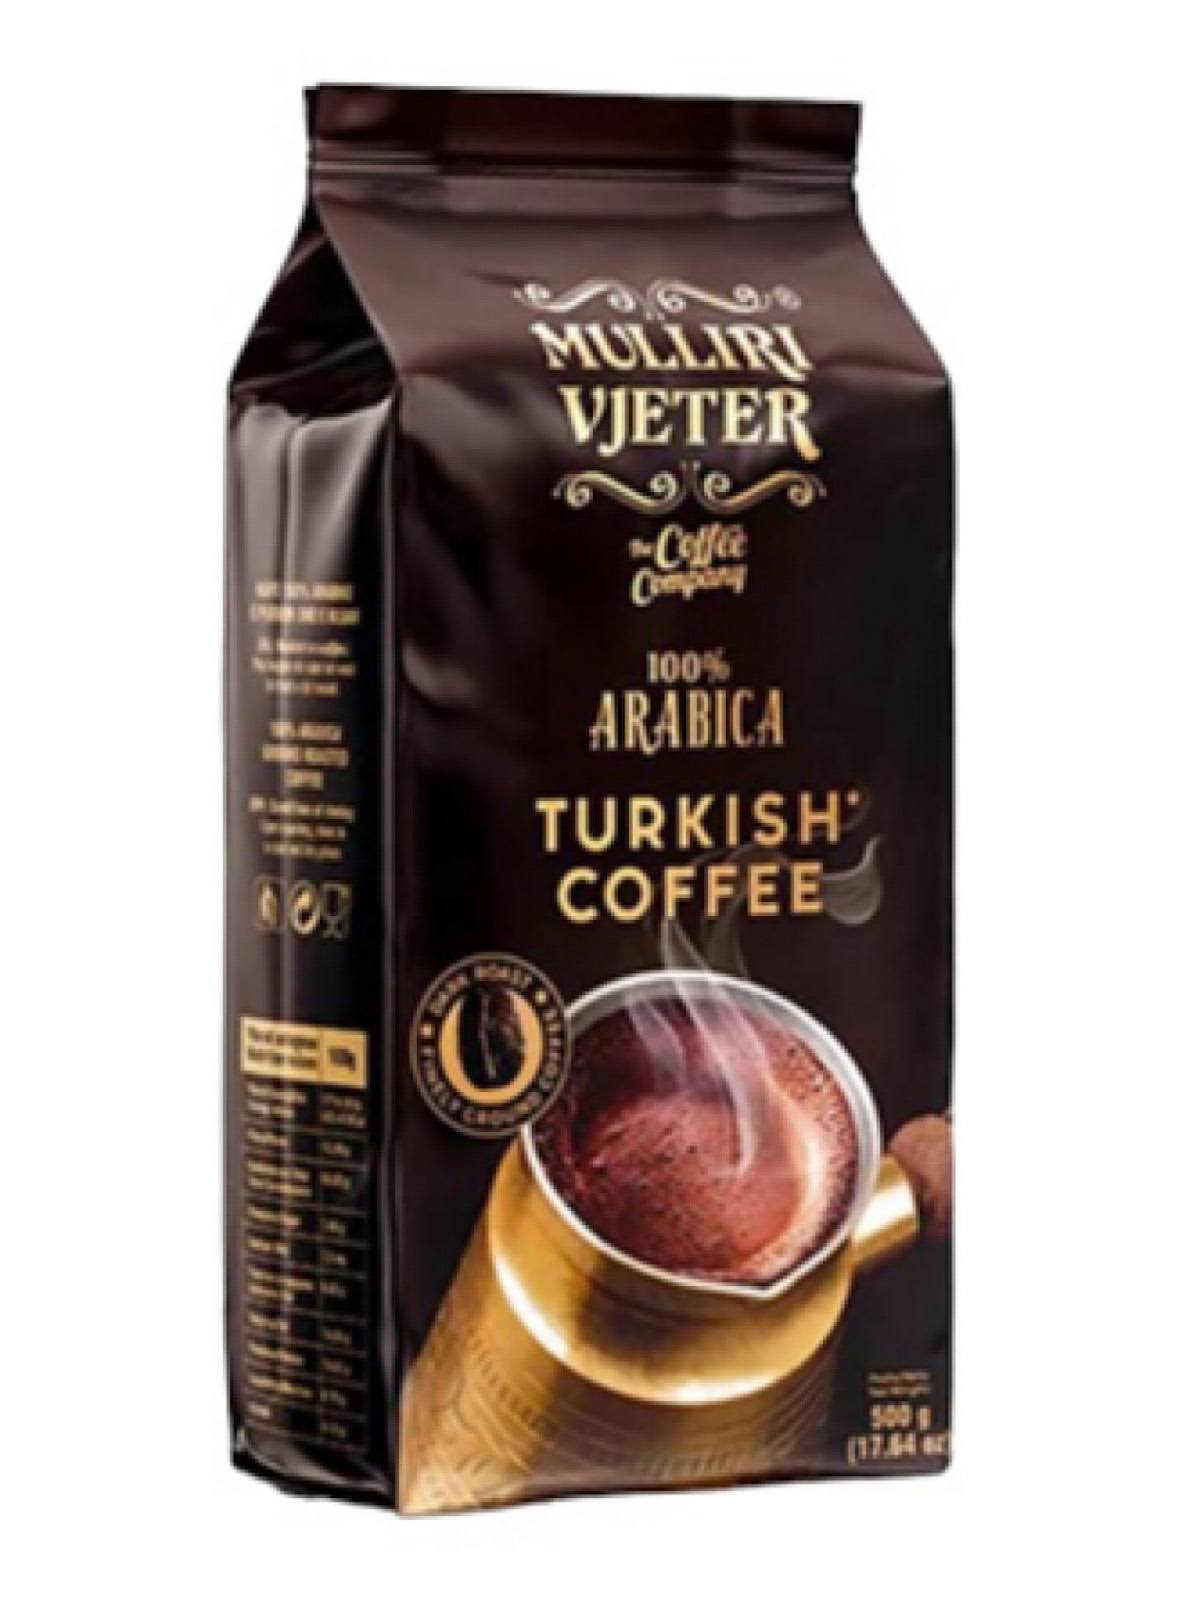 Mulliri Vjeter, Turkish Coffee , Albanian Grounded High Caffeine 100% Arabica, Certified Organic (500g)